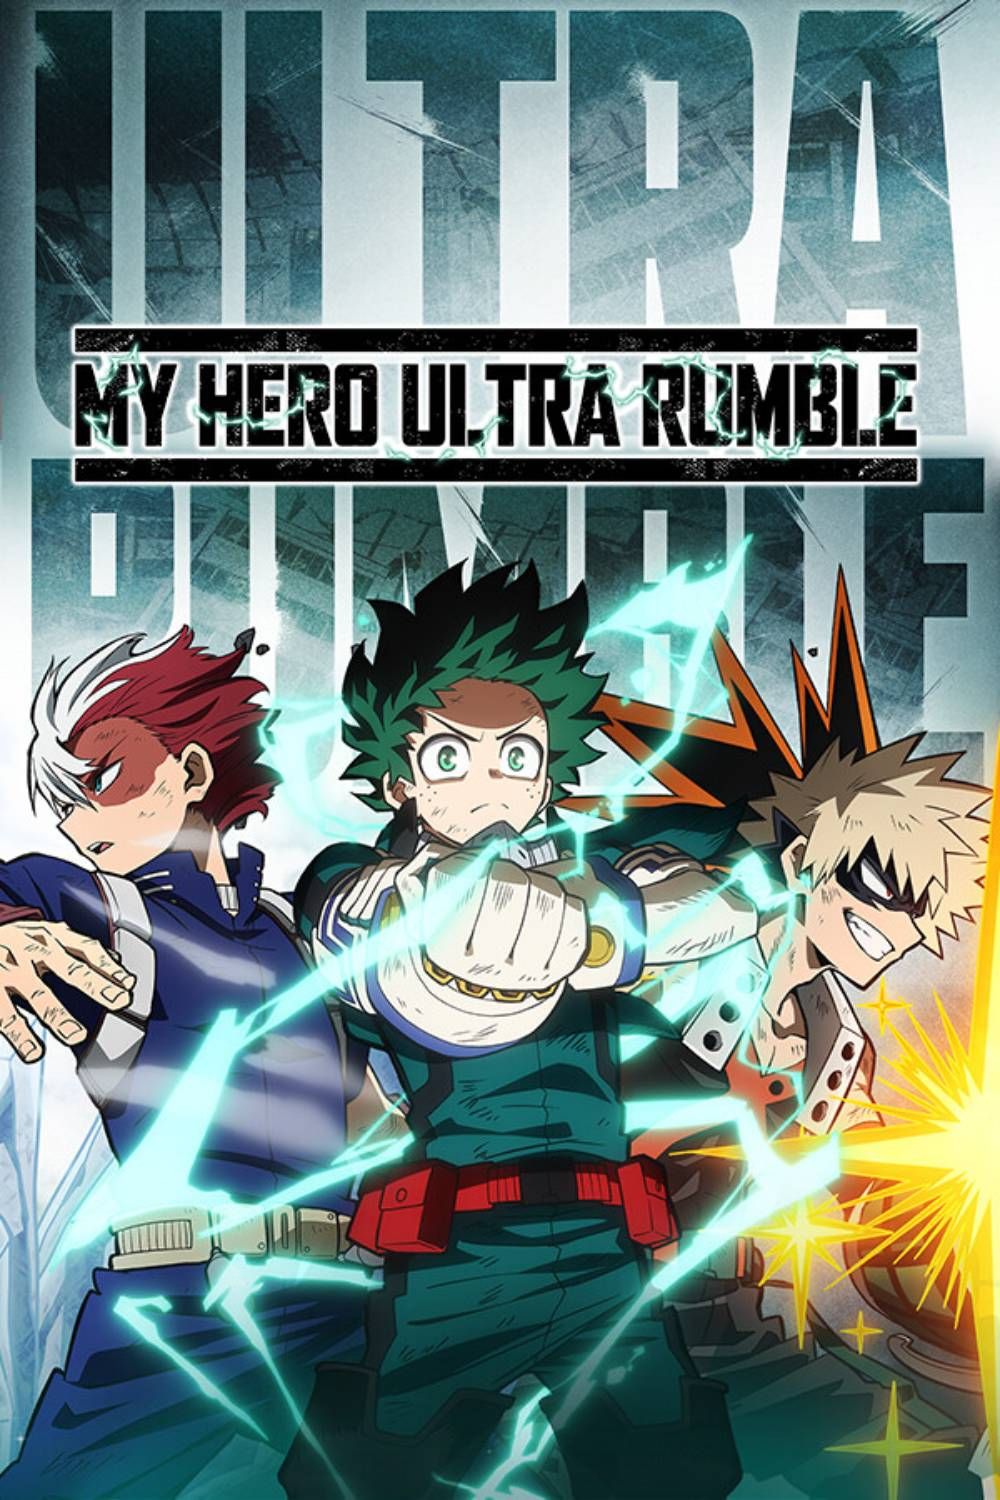 My Hero Ultra Rumble brings MHA to the Battle Royale Genre